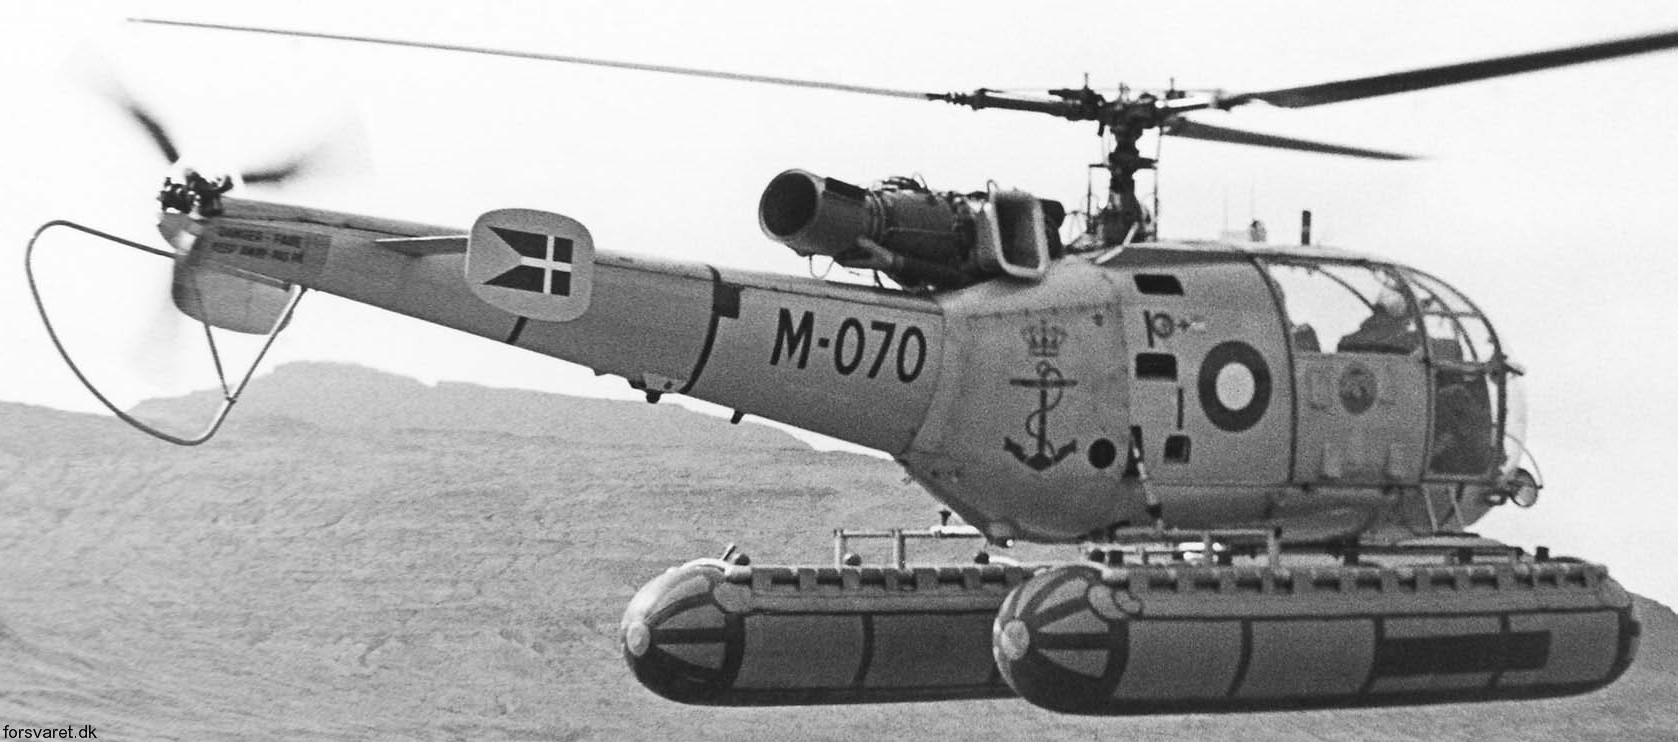 sa 316b alouette iii helicopter royal danish navy søværnet kongelige danske marine sud aviation m-070 04